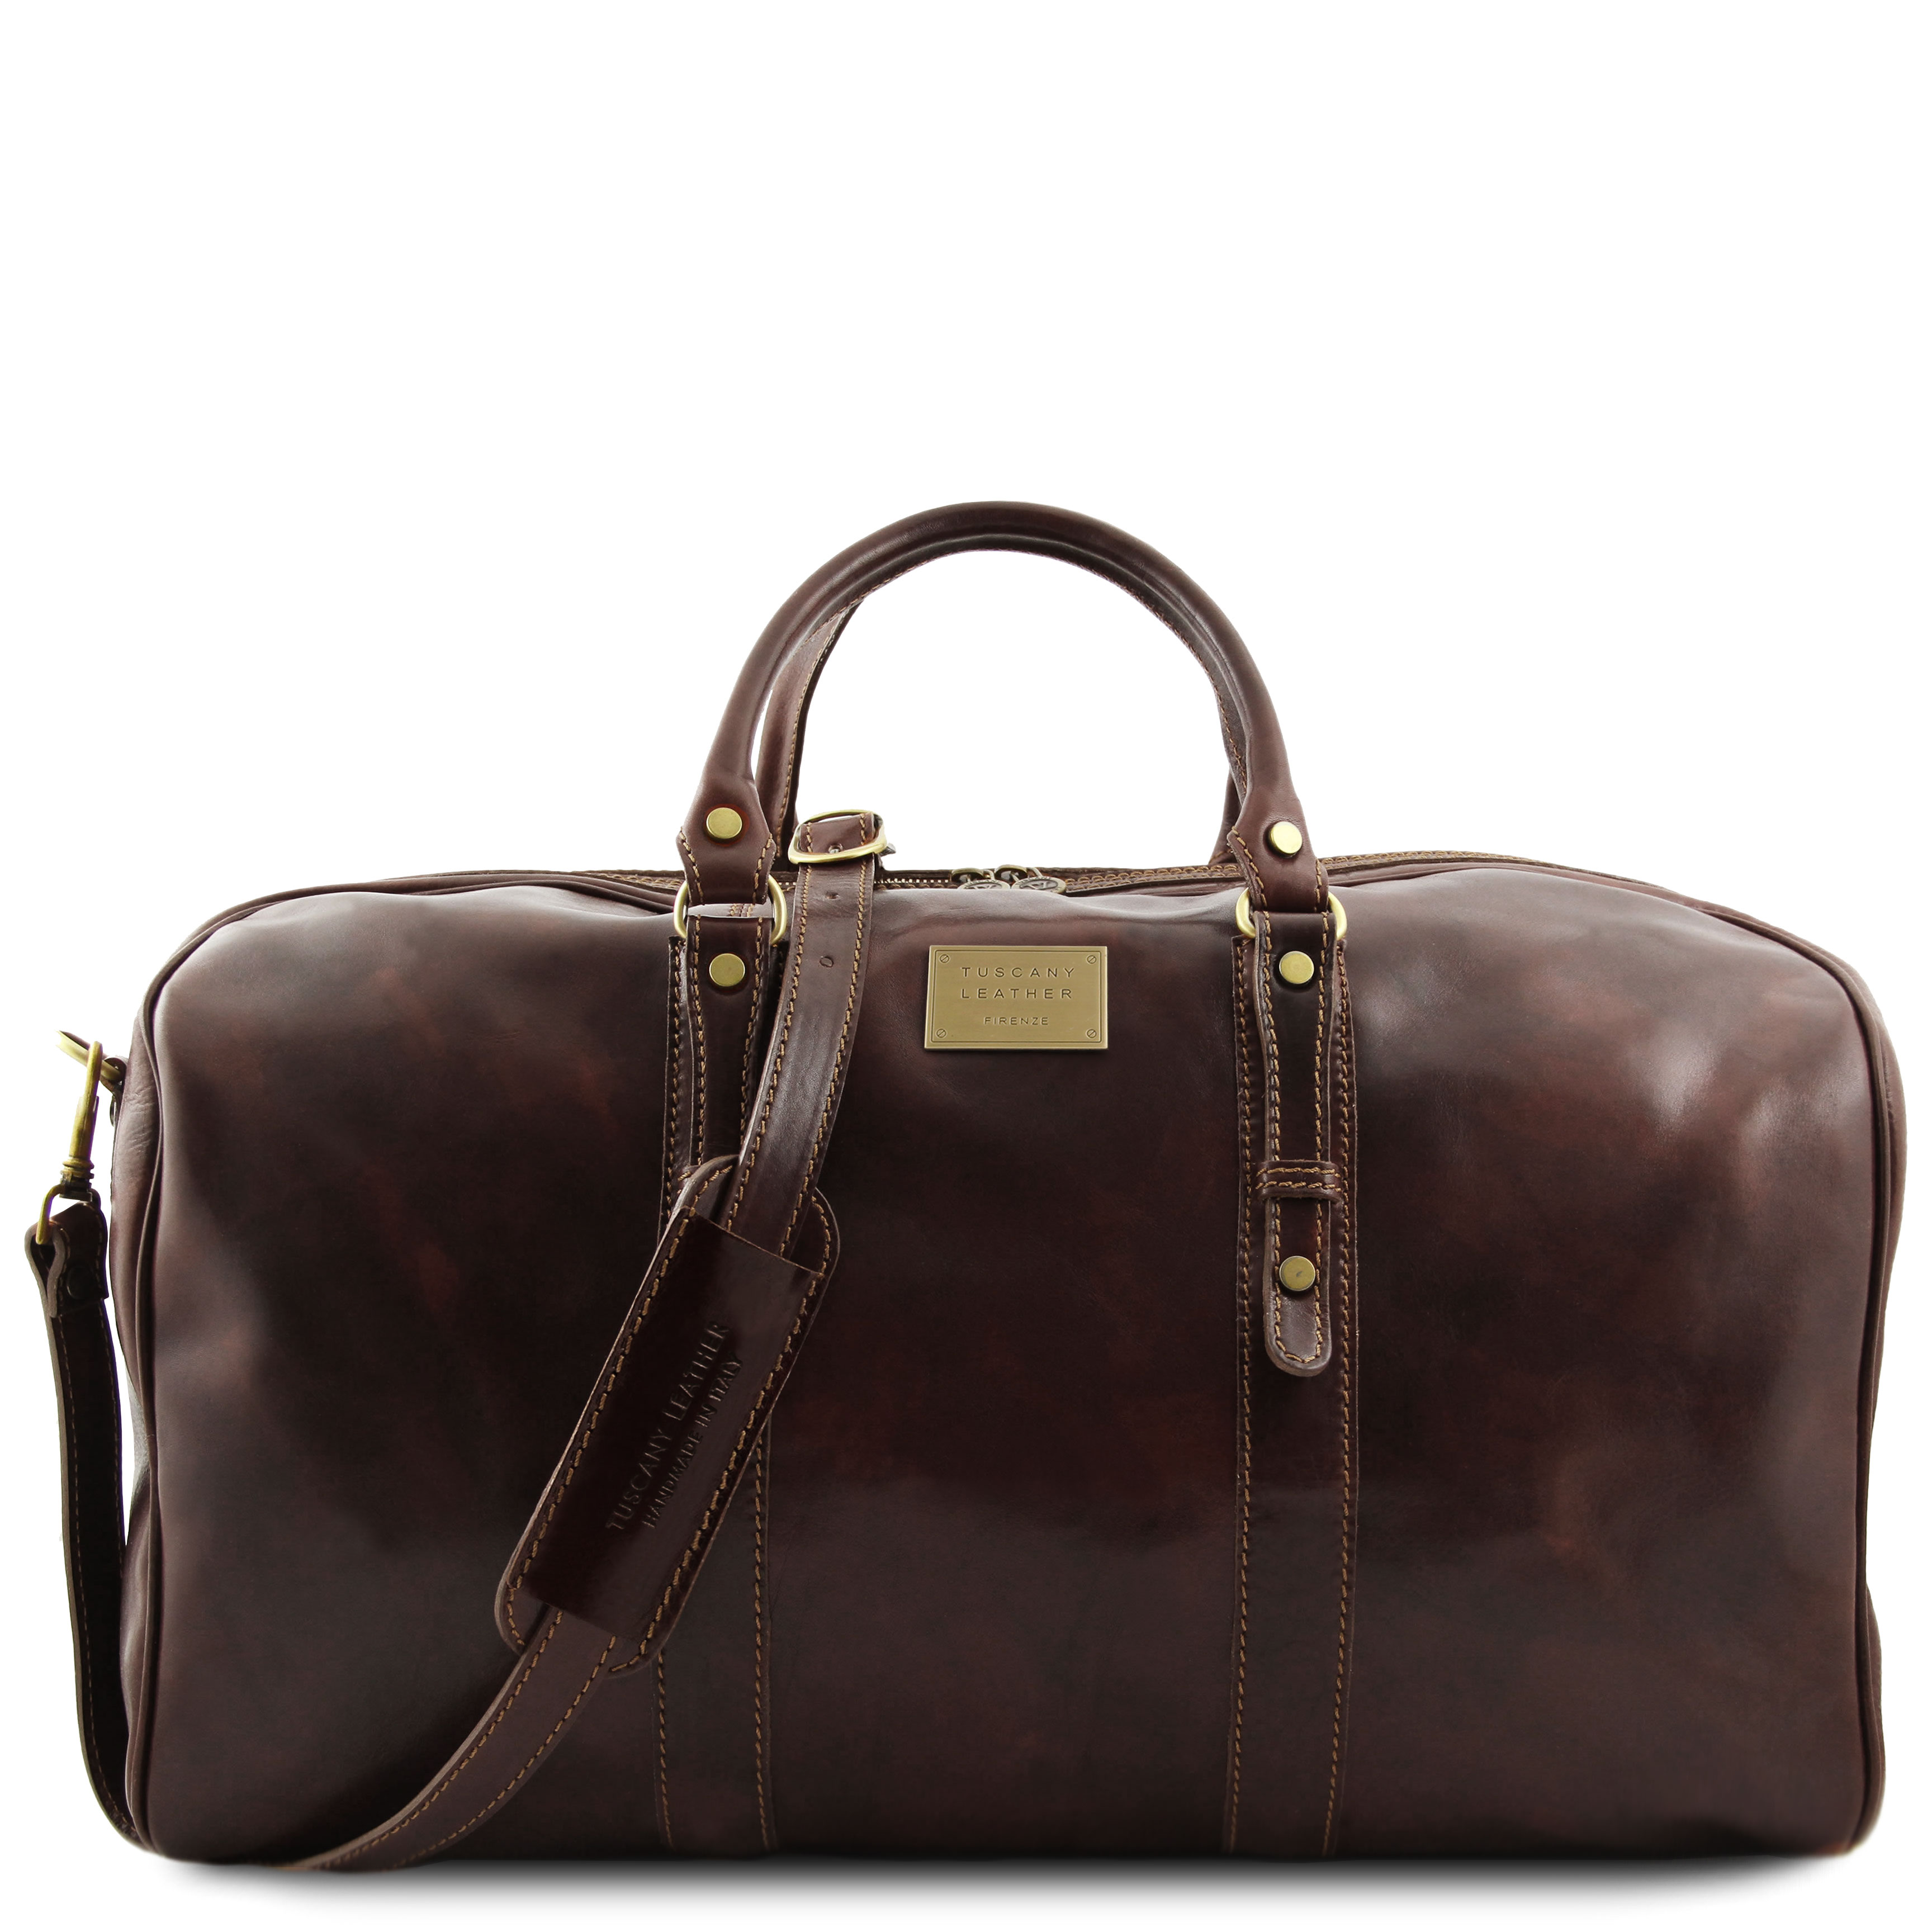 Francoforte Exclusive Leather Weekender Travel Bag - Large size Dark Brown